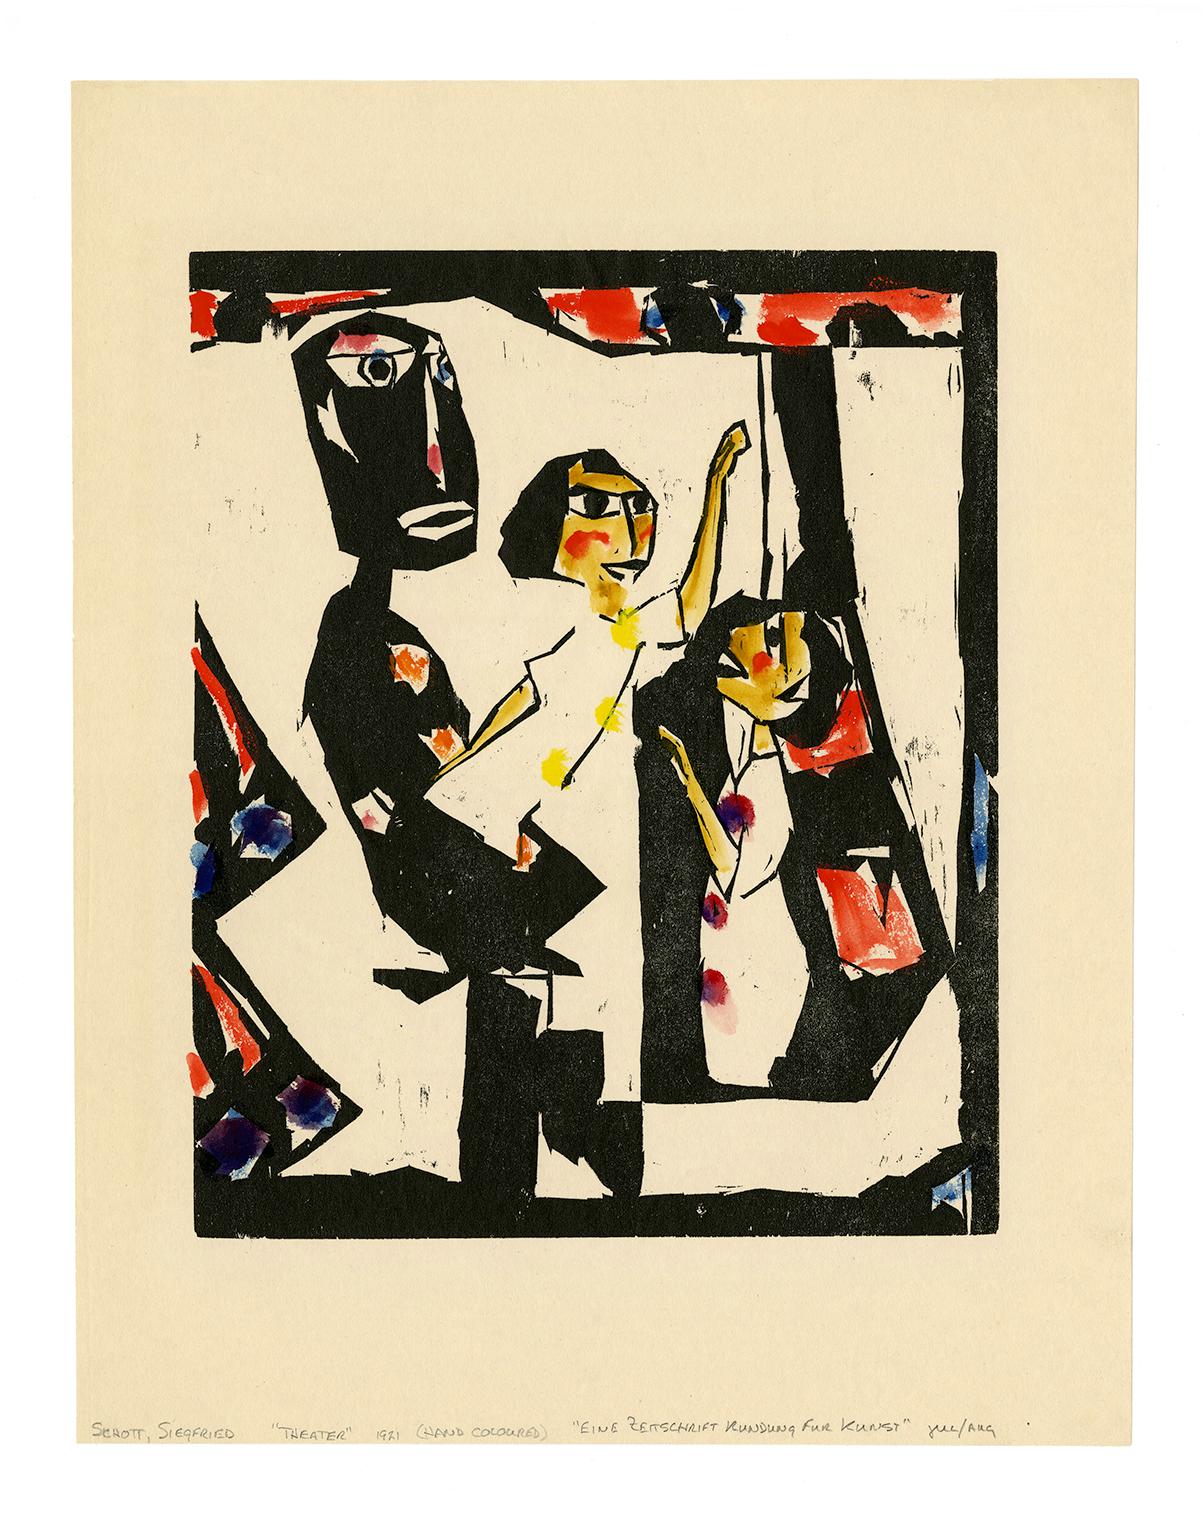 'Theater' — 1920s German Expressionism - Print by Siegfried Schott